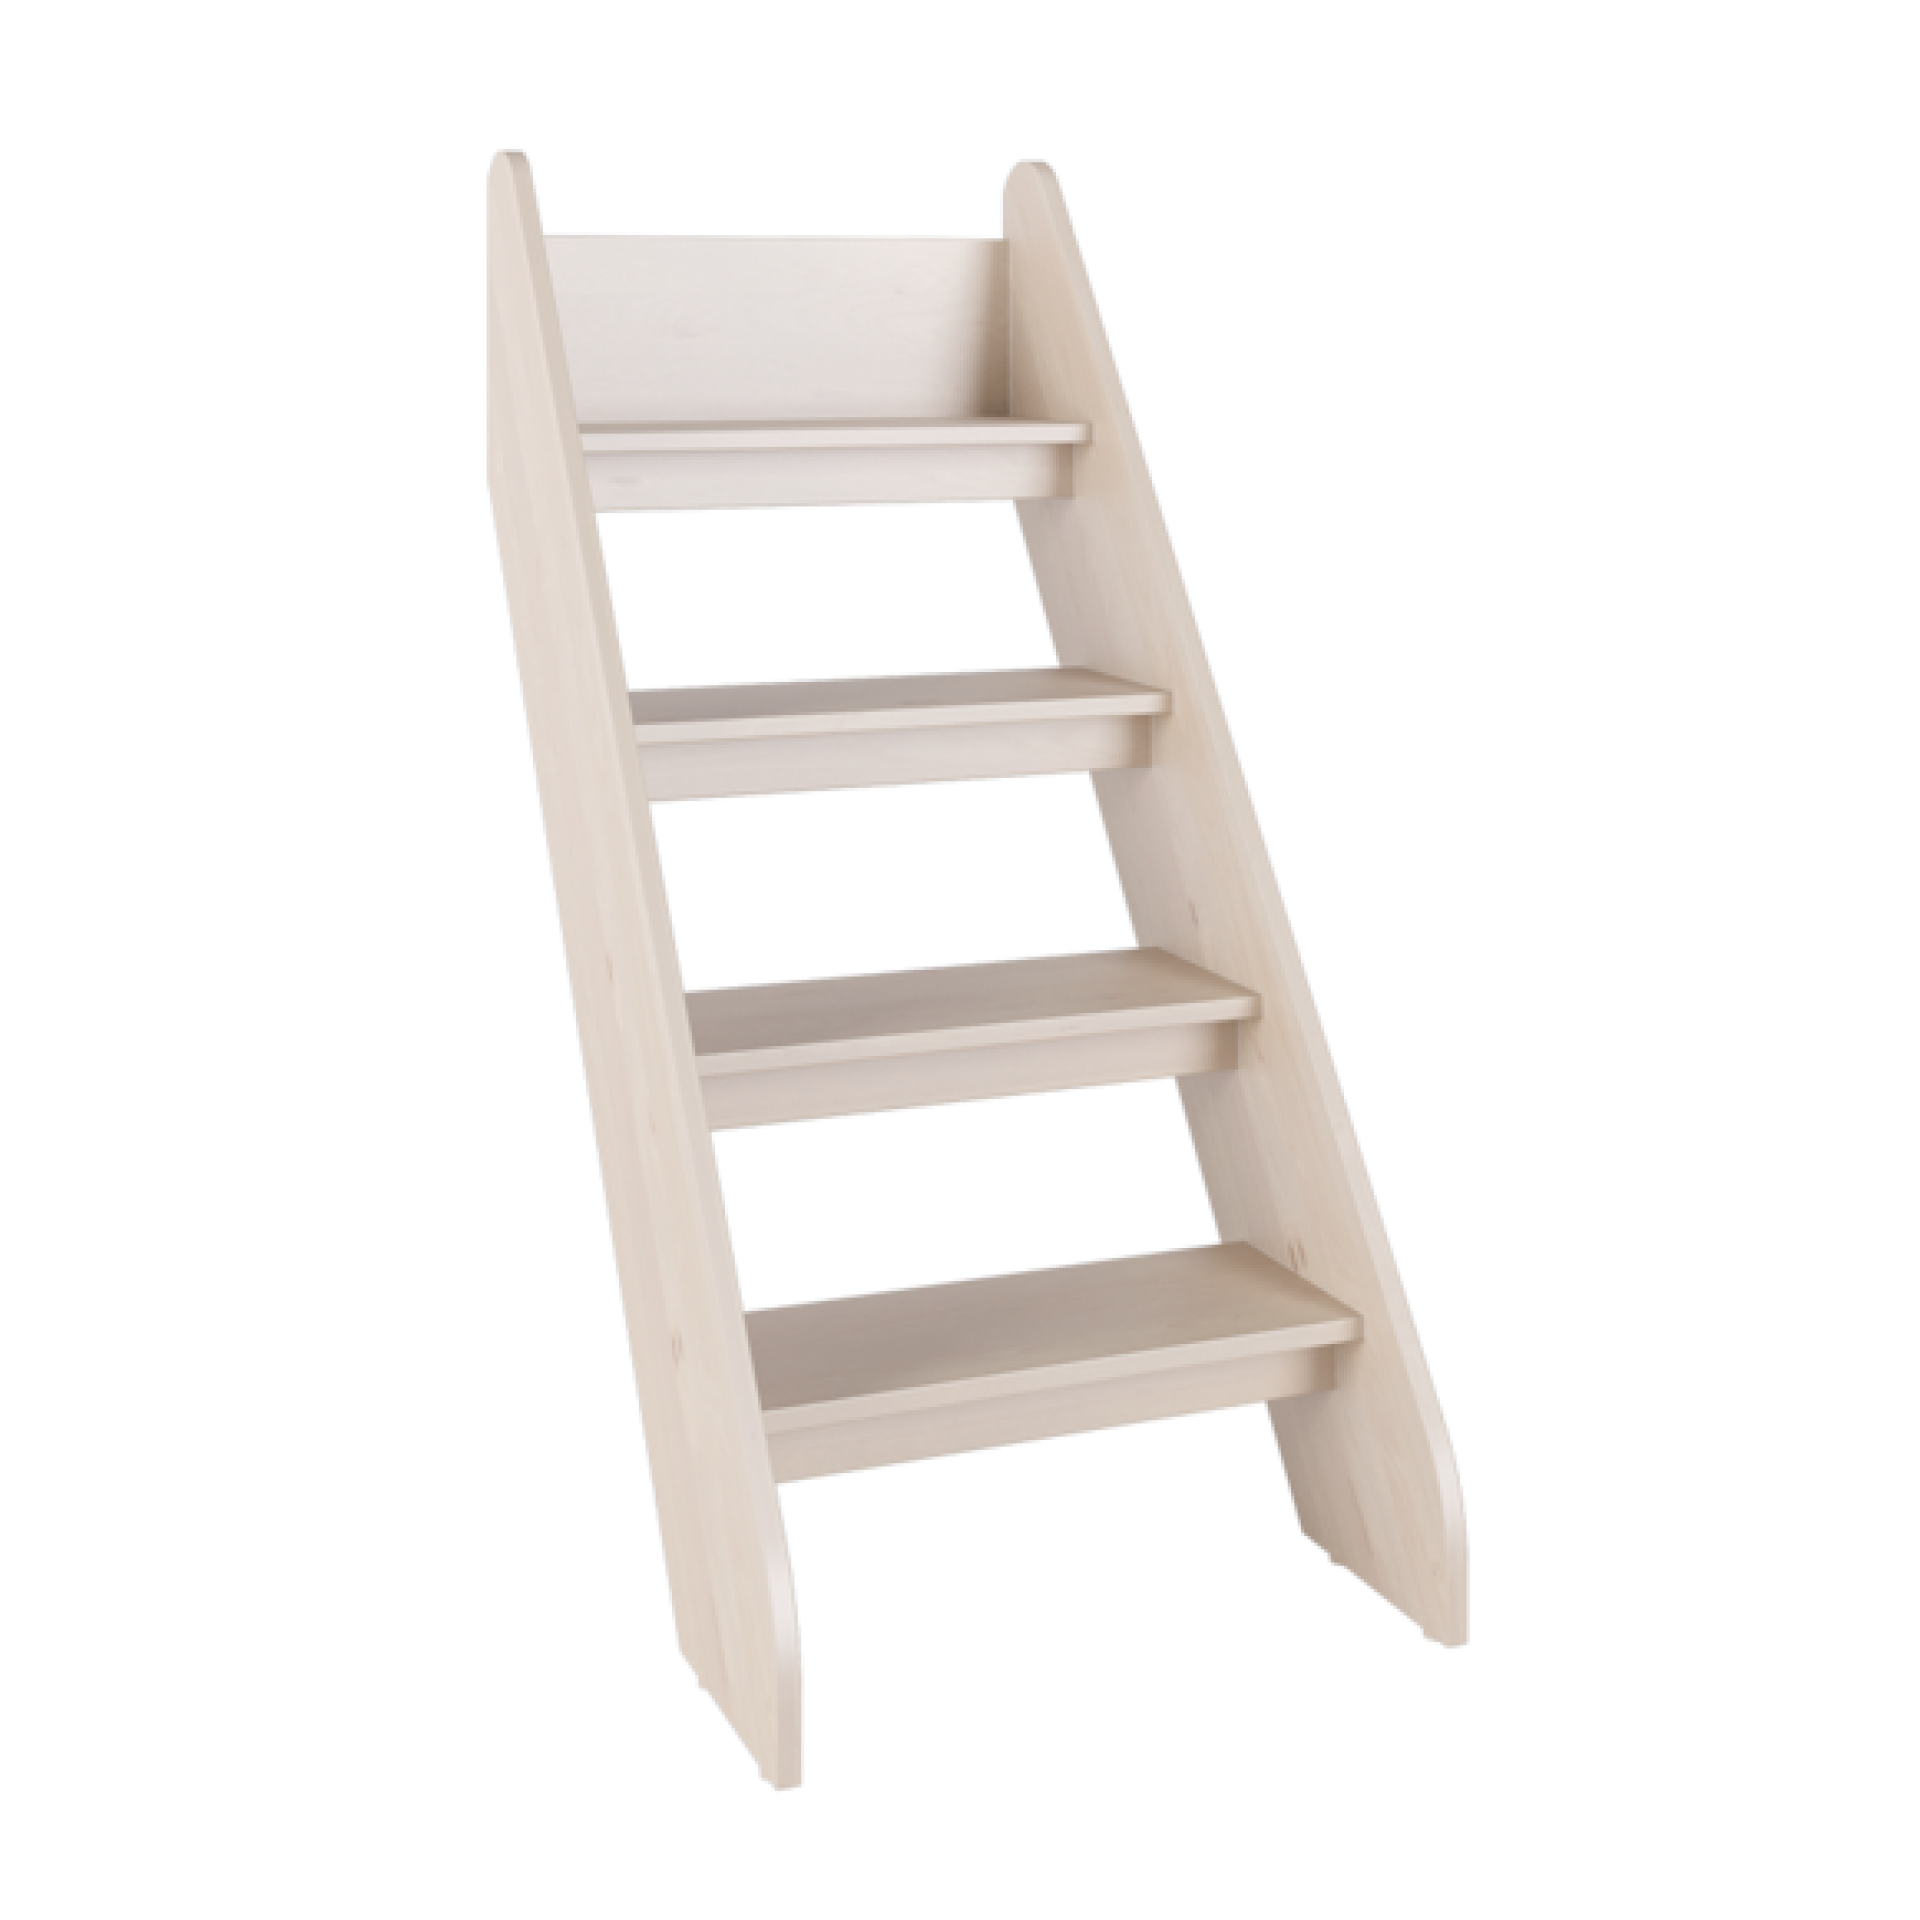 Лестница приставная для двухъярусной кровати 180см. Лк1 лестница приставная для кровати. Лестница детская приставная. Лестницы для детских кроватей. Ступеньки для кровати